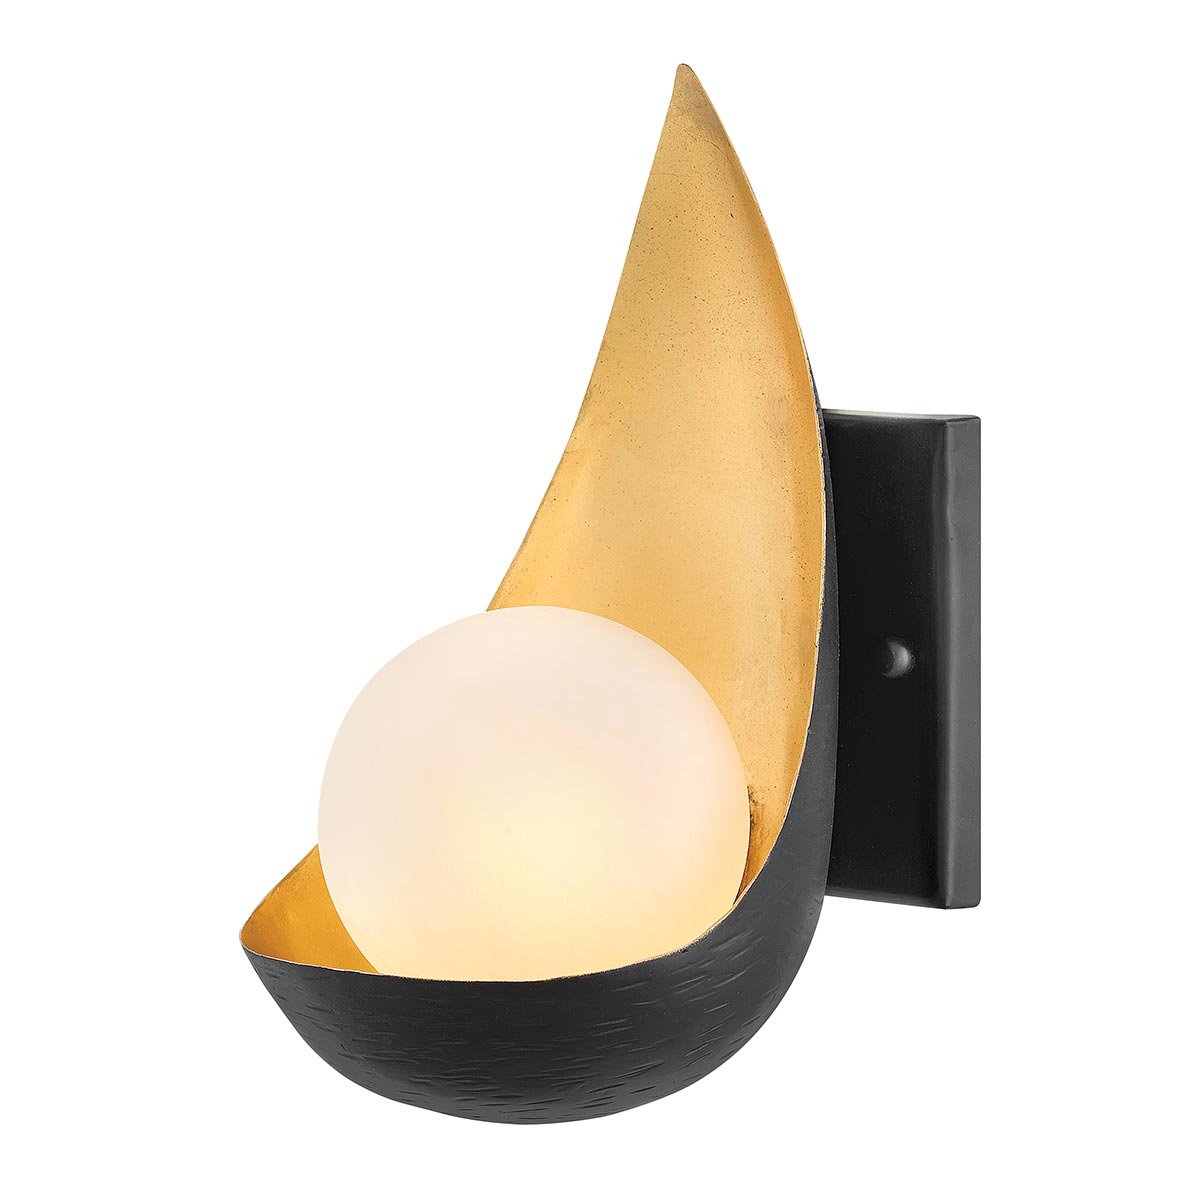 Ren Contemporary Black & Gold 1 Lamp Designer Wall Light White Glass